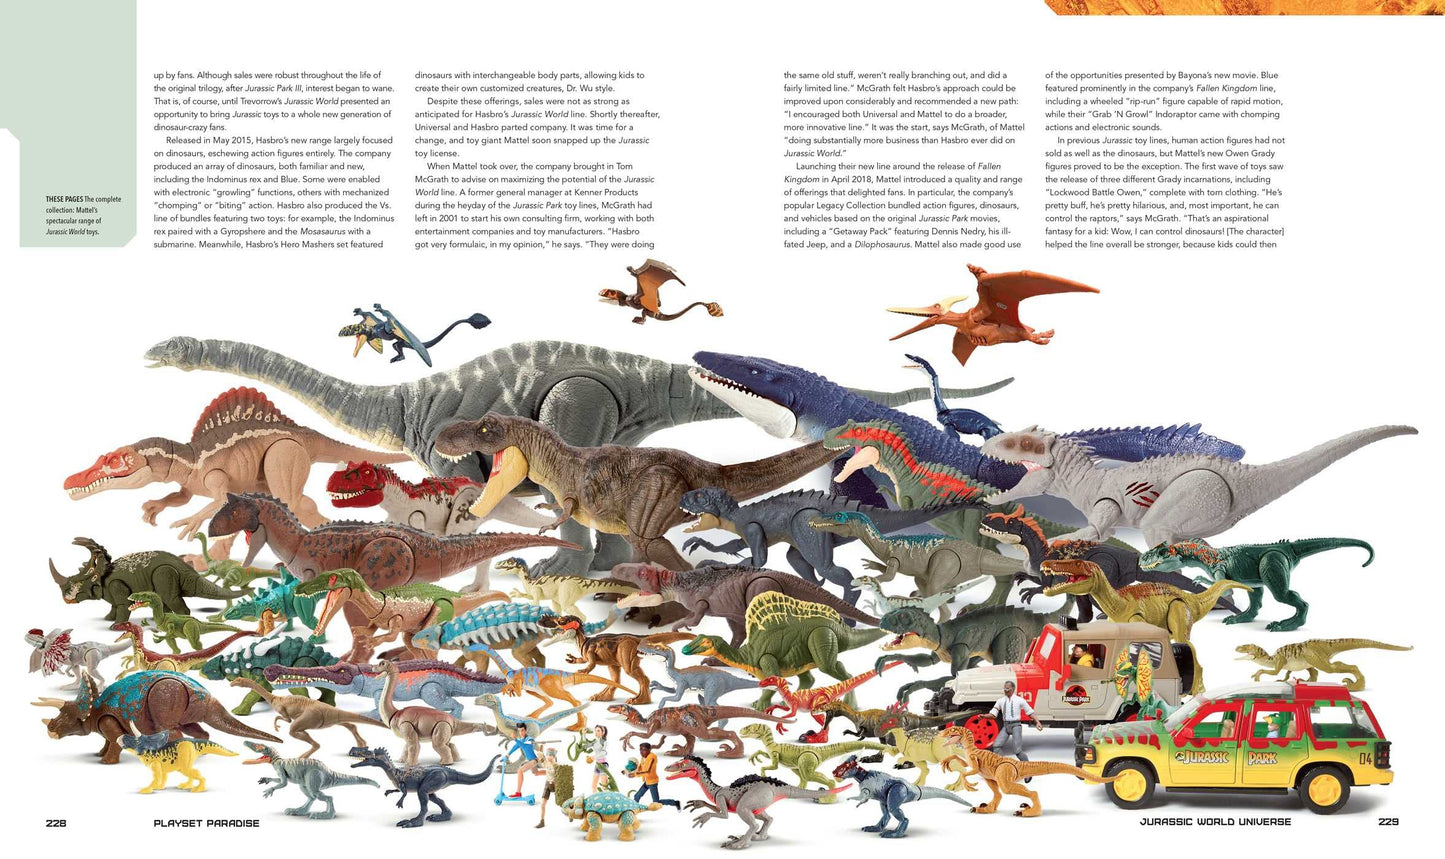 Jurassic World: The Ultimate Visual History (Артбук)